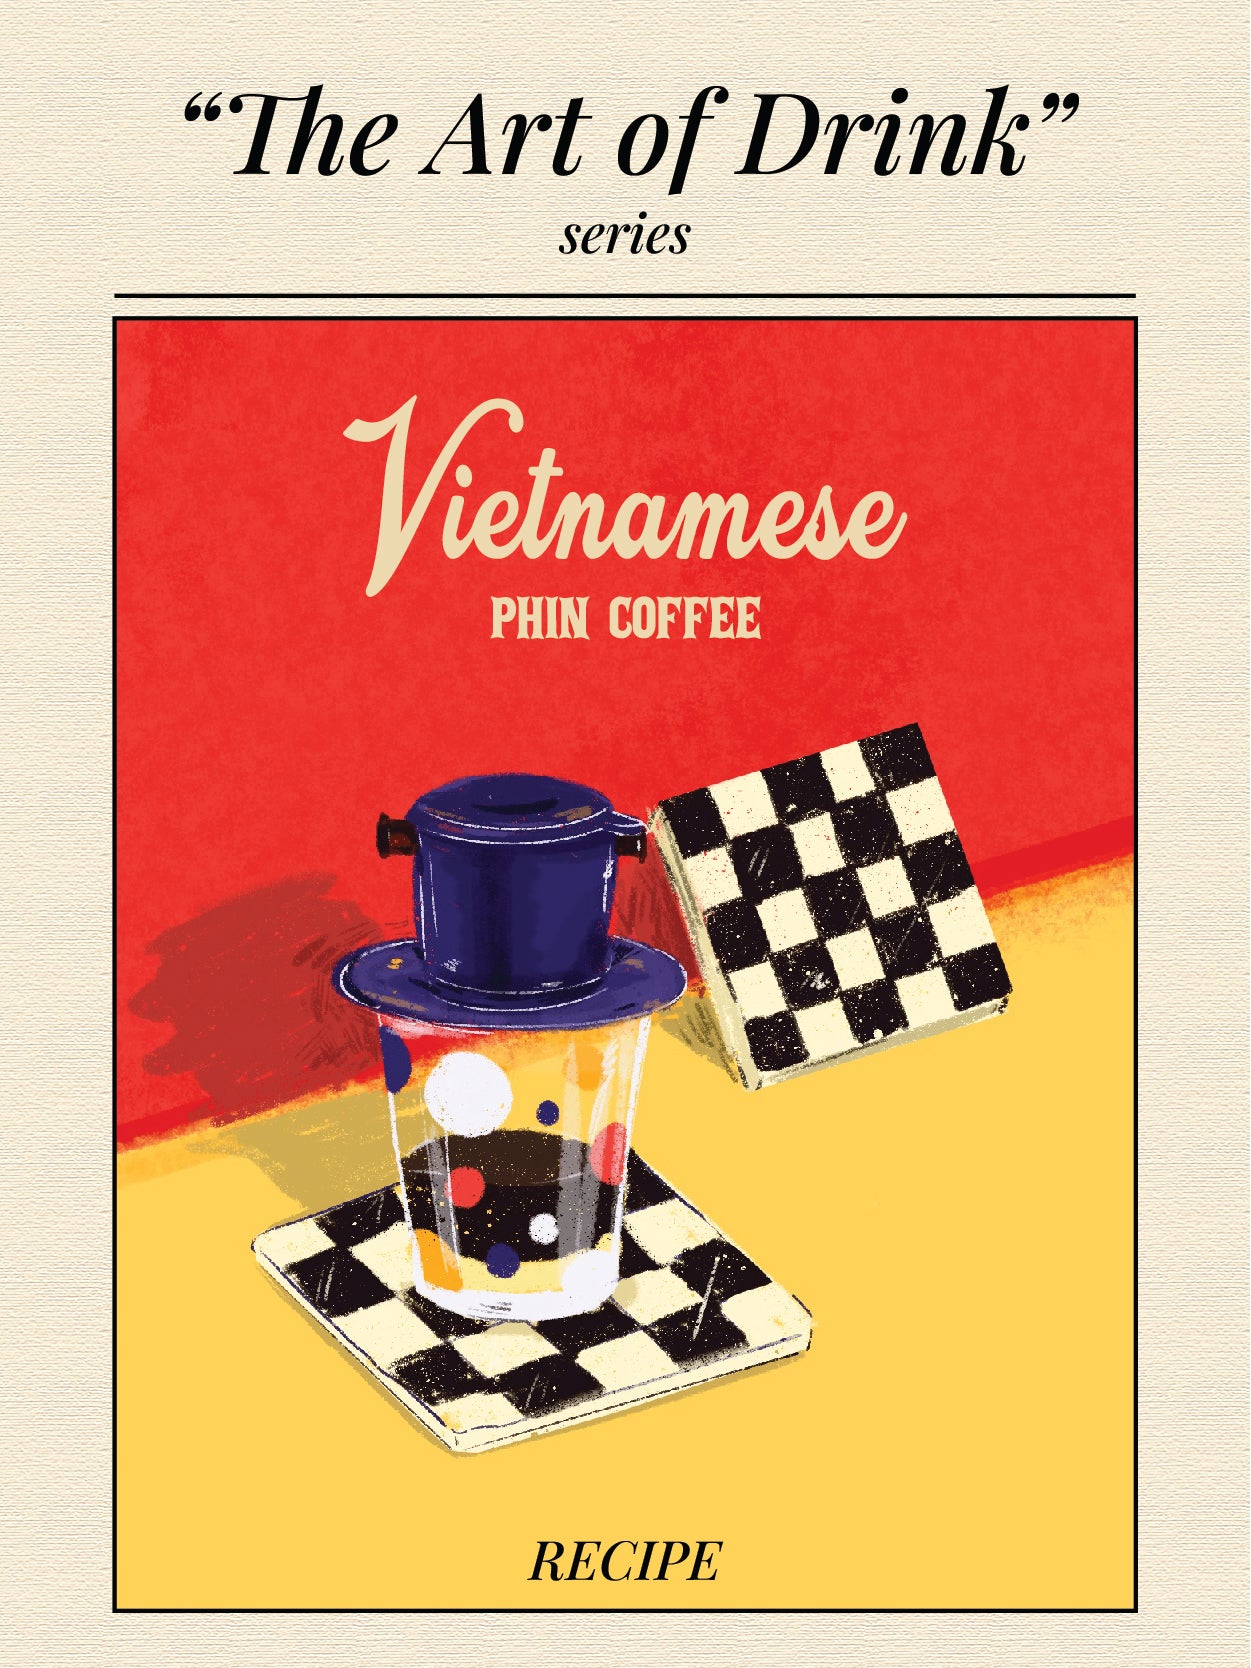 VIETNAMESE PHIN COFFEE - "The Art of Drink" series